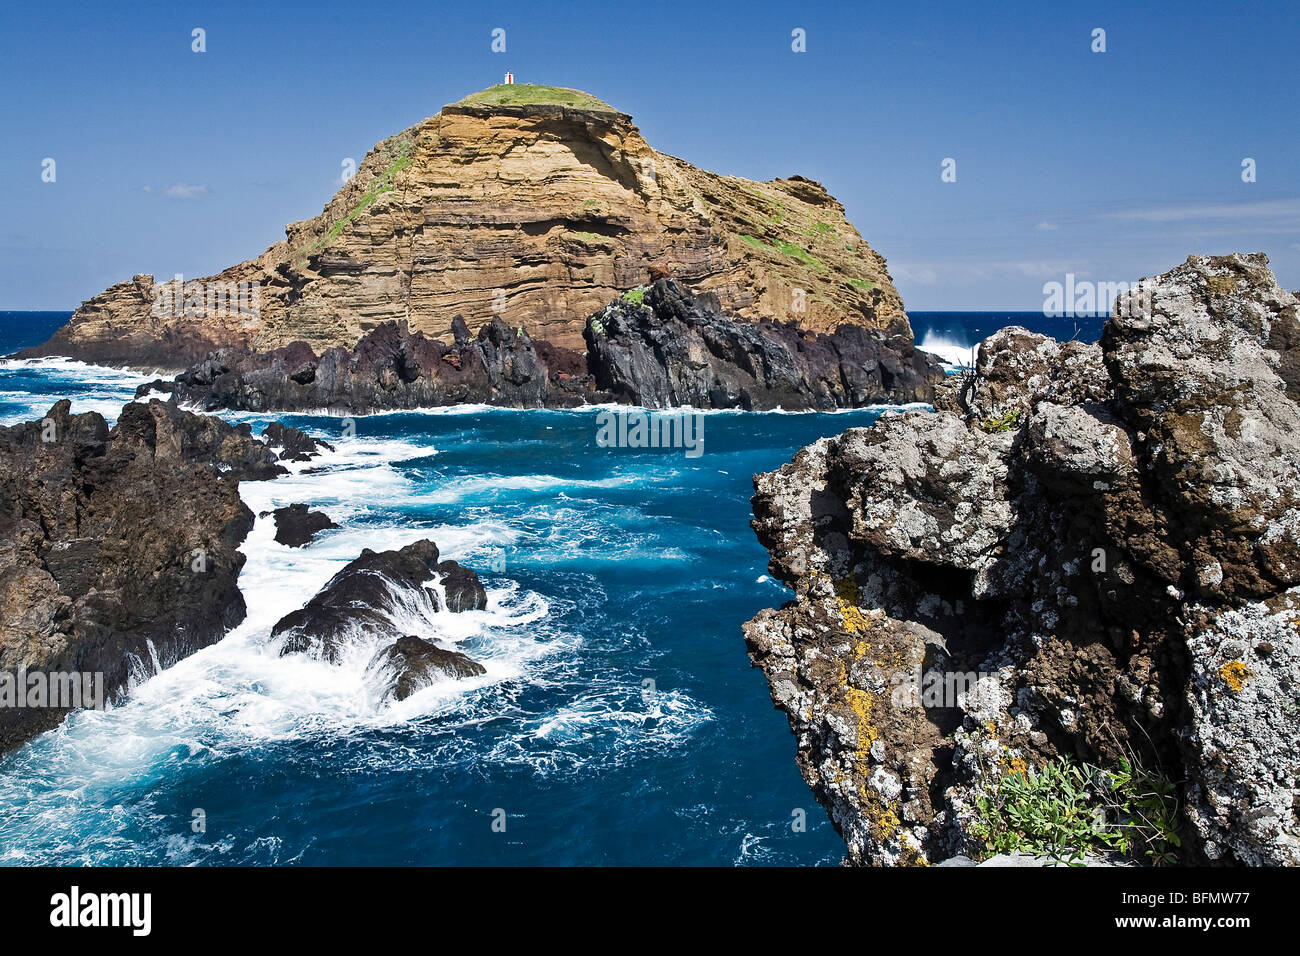 Portugal, Ilha da Medeira, Funcahl, Lanceiros. The dramatic rocky shore line of Lanceiros. Stock Photo